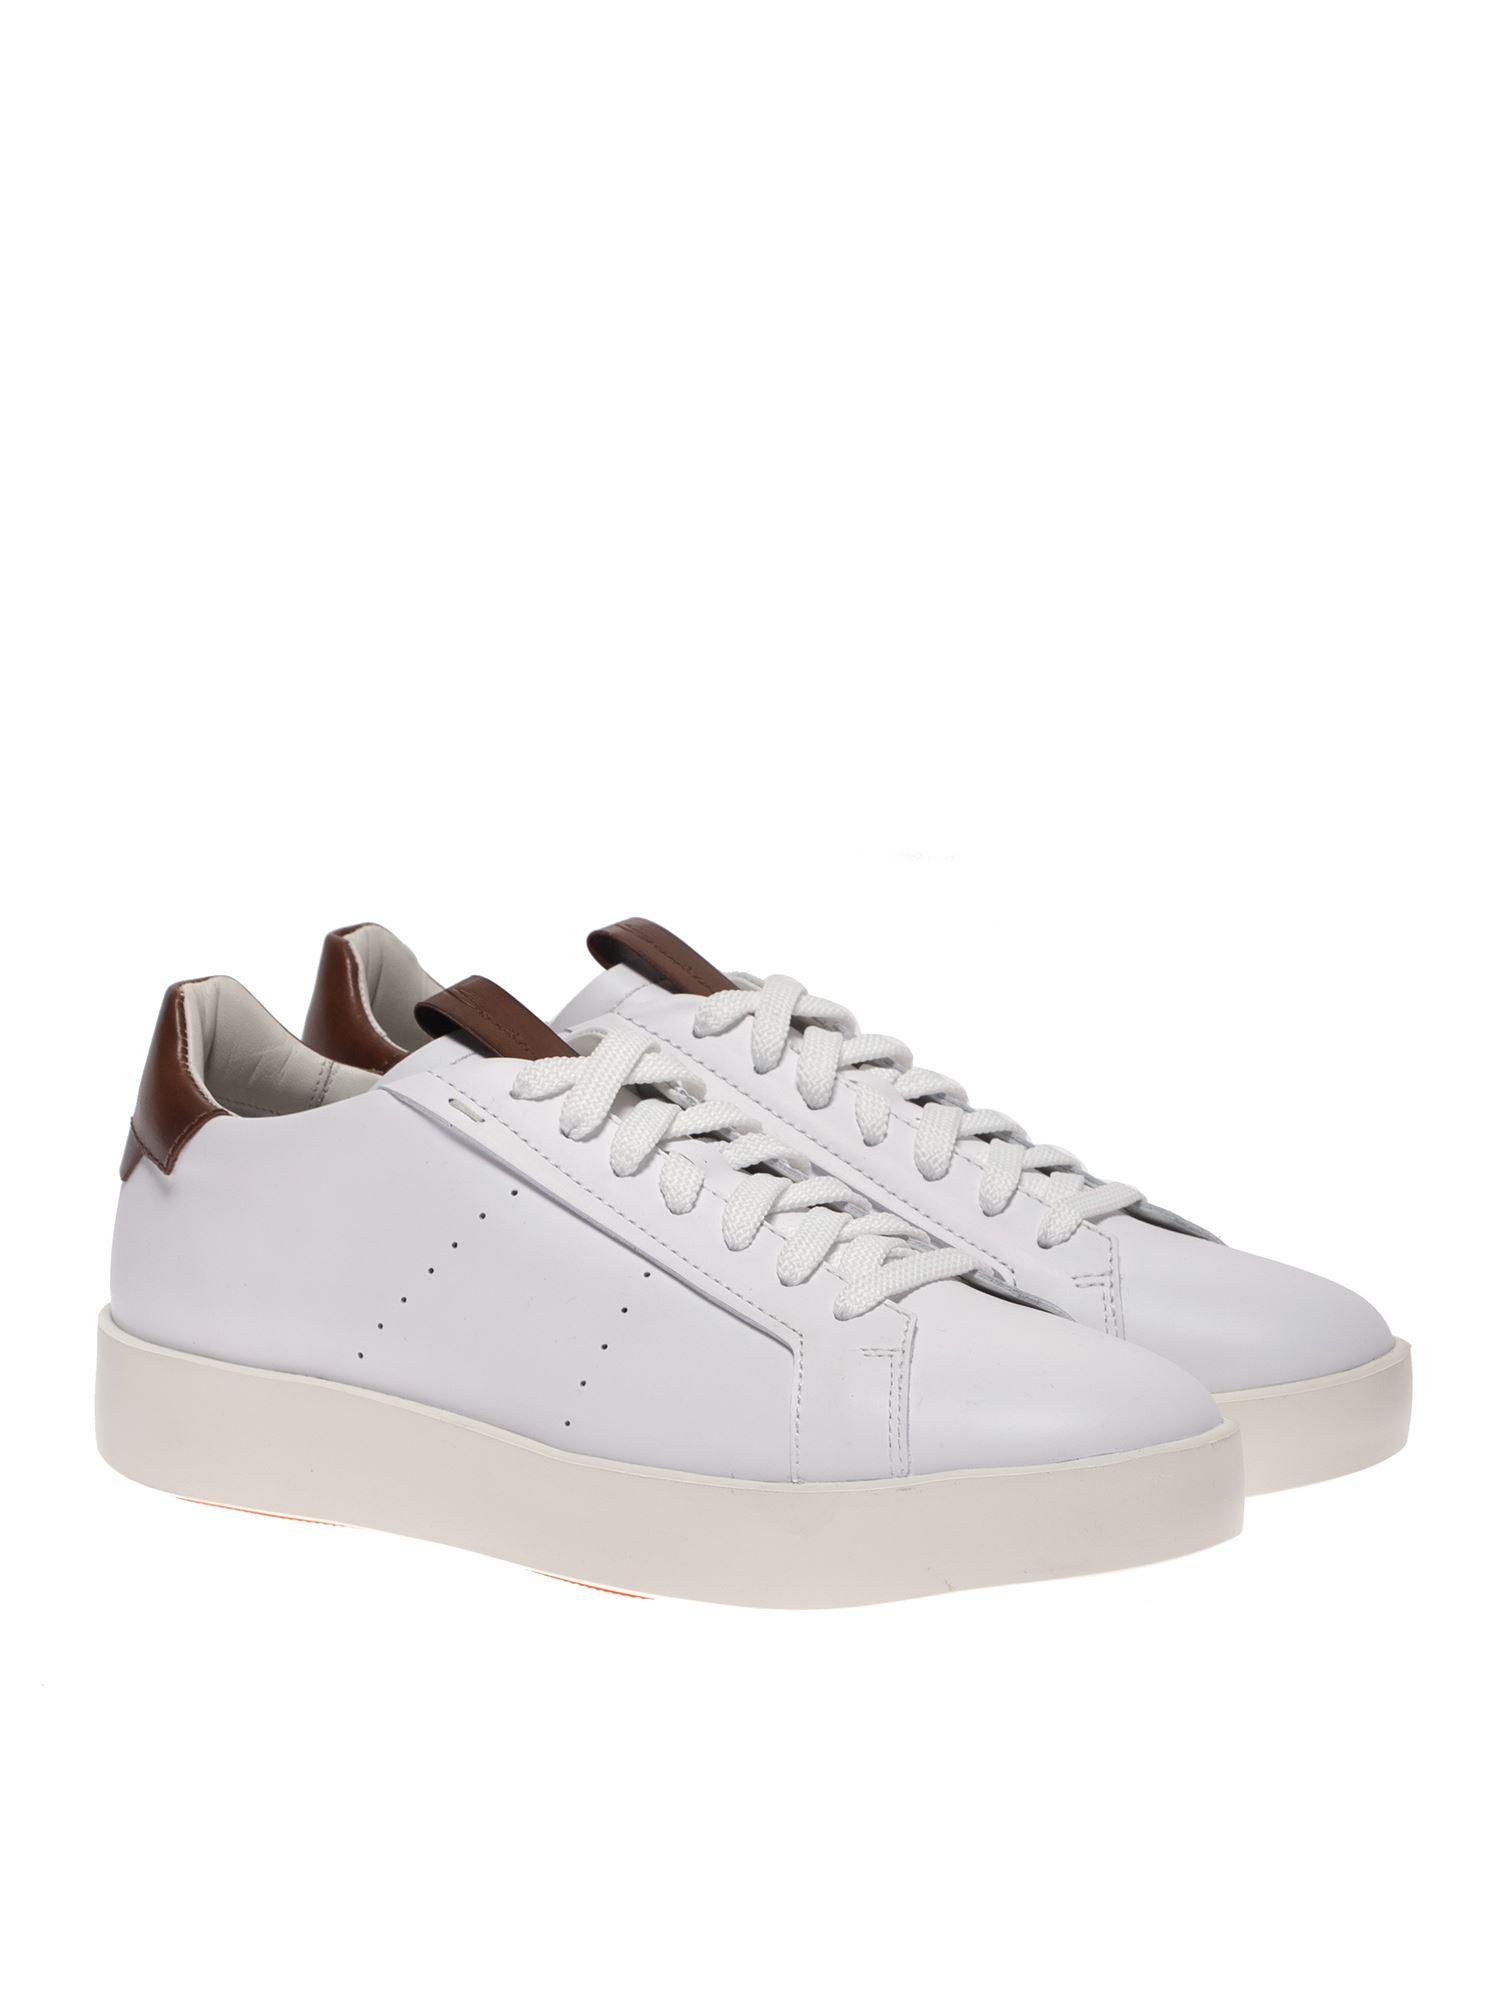 Santoni Leather Sneakers in White for Men - Lyst